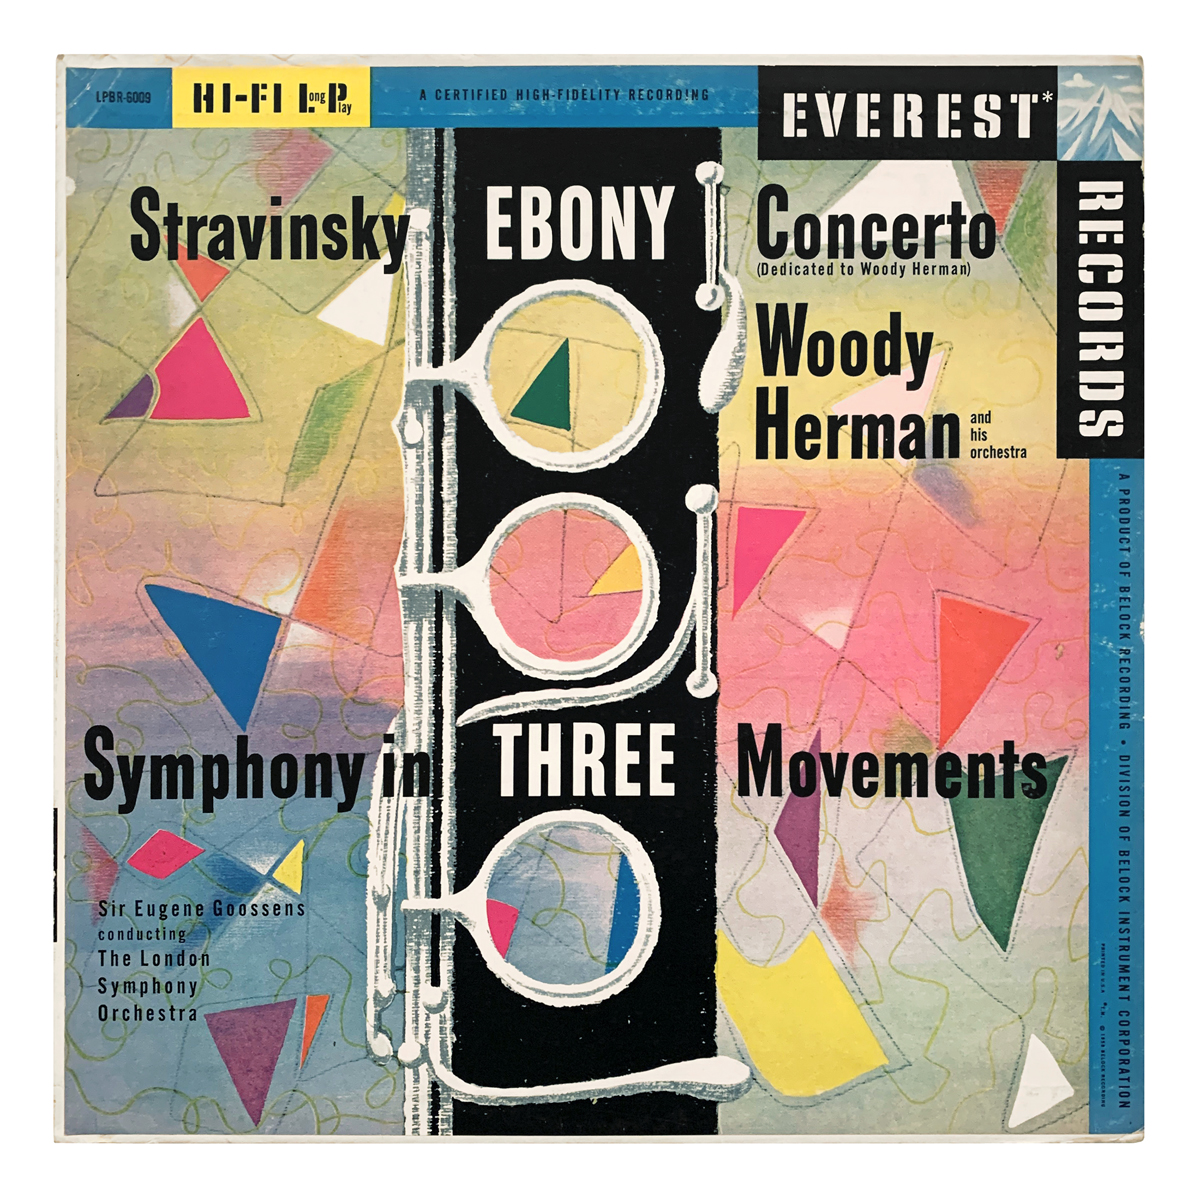 Stravinsky woody herman ebony concerto mp3 free download